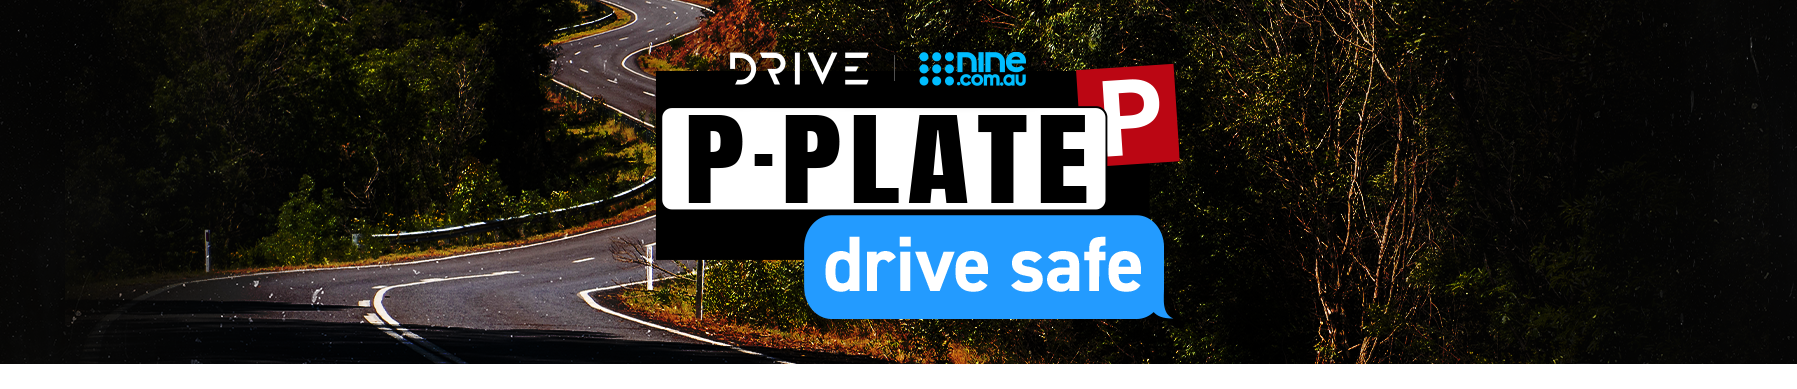 P-Plate Drive Safe